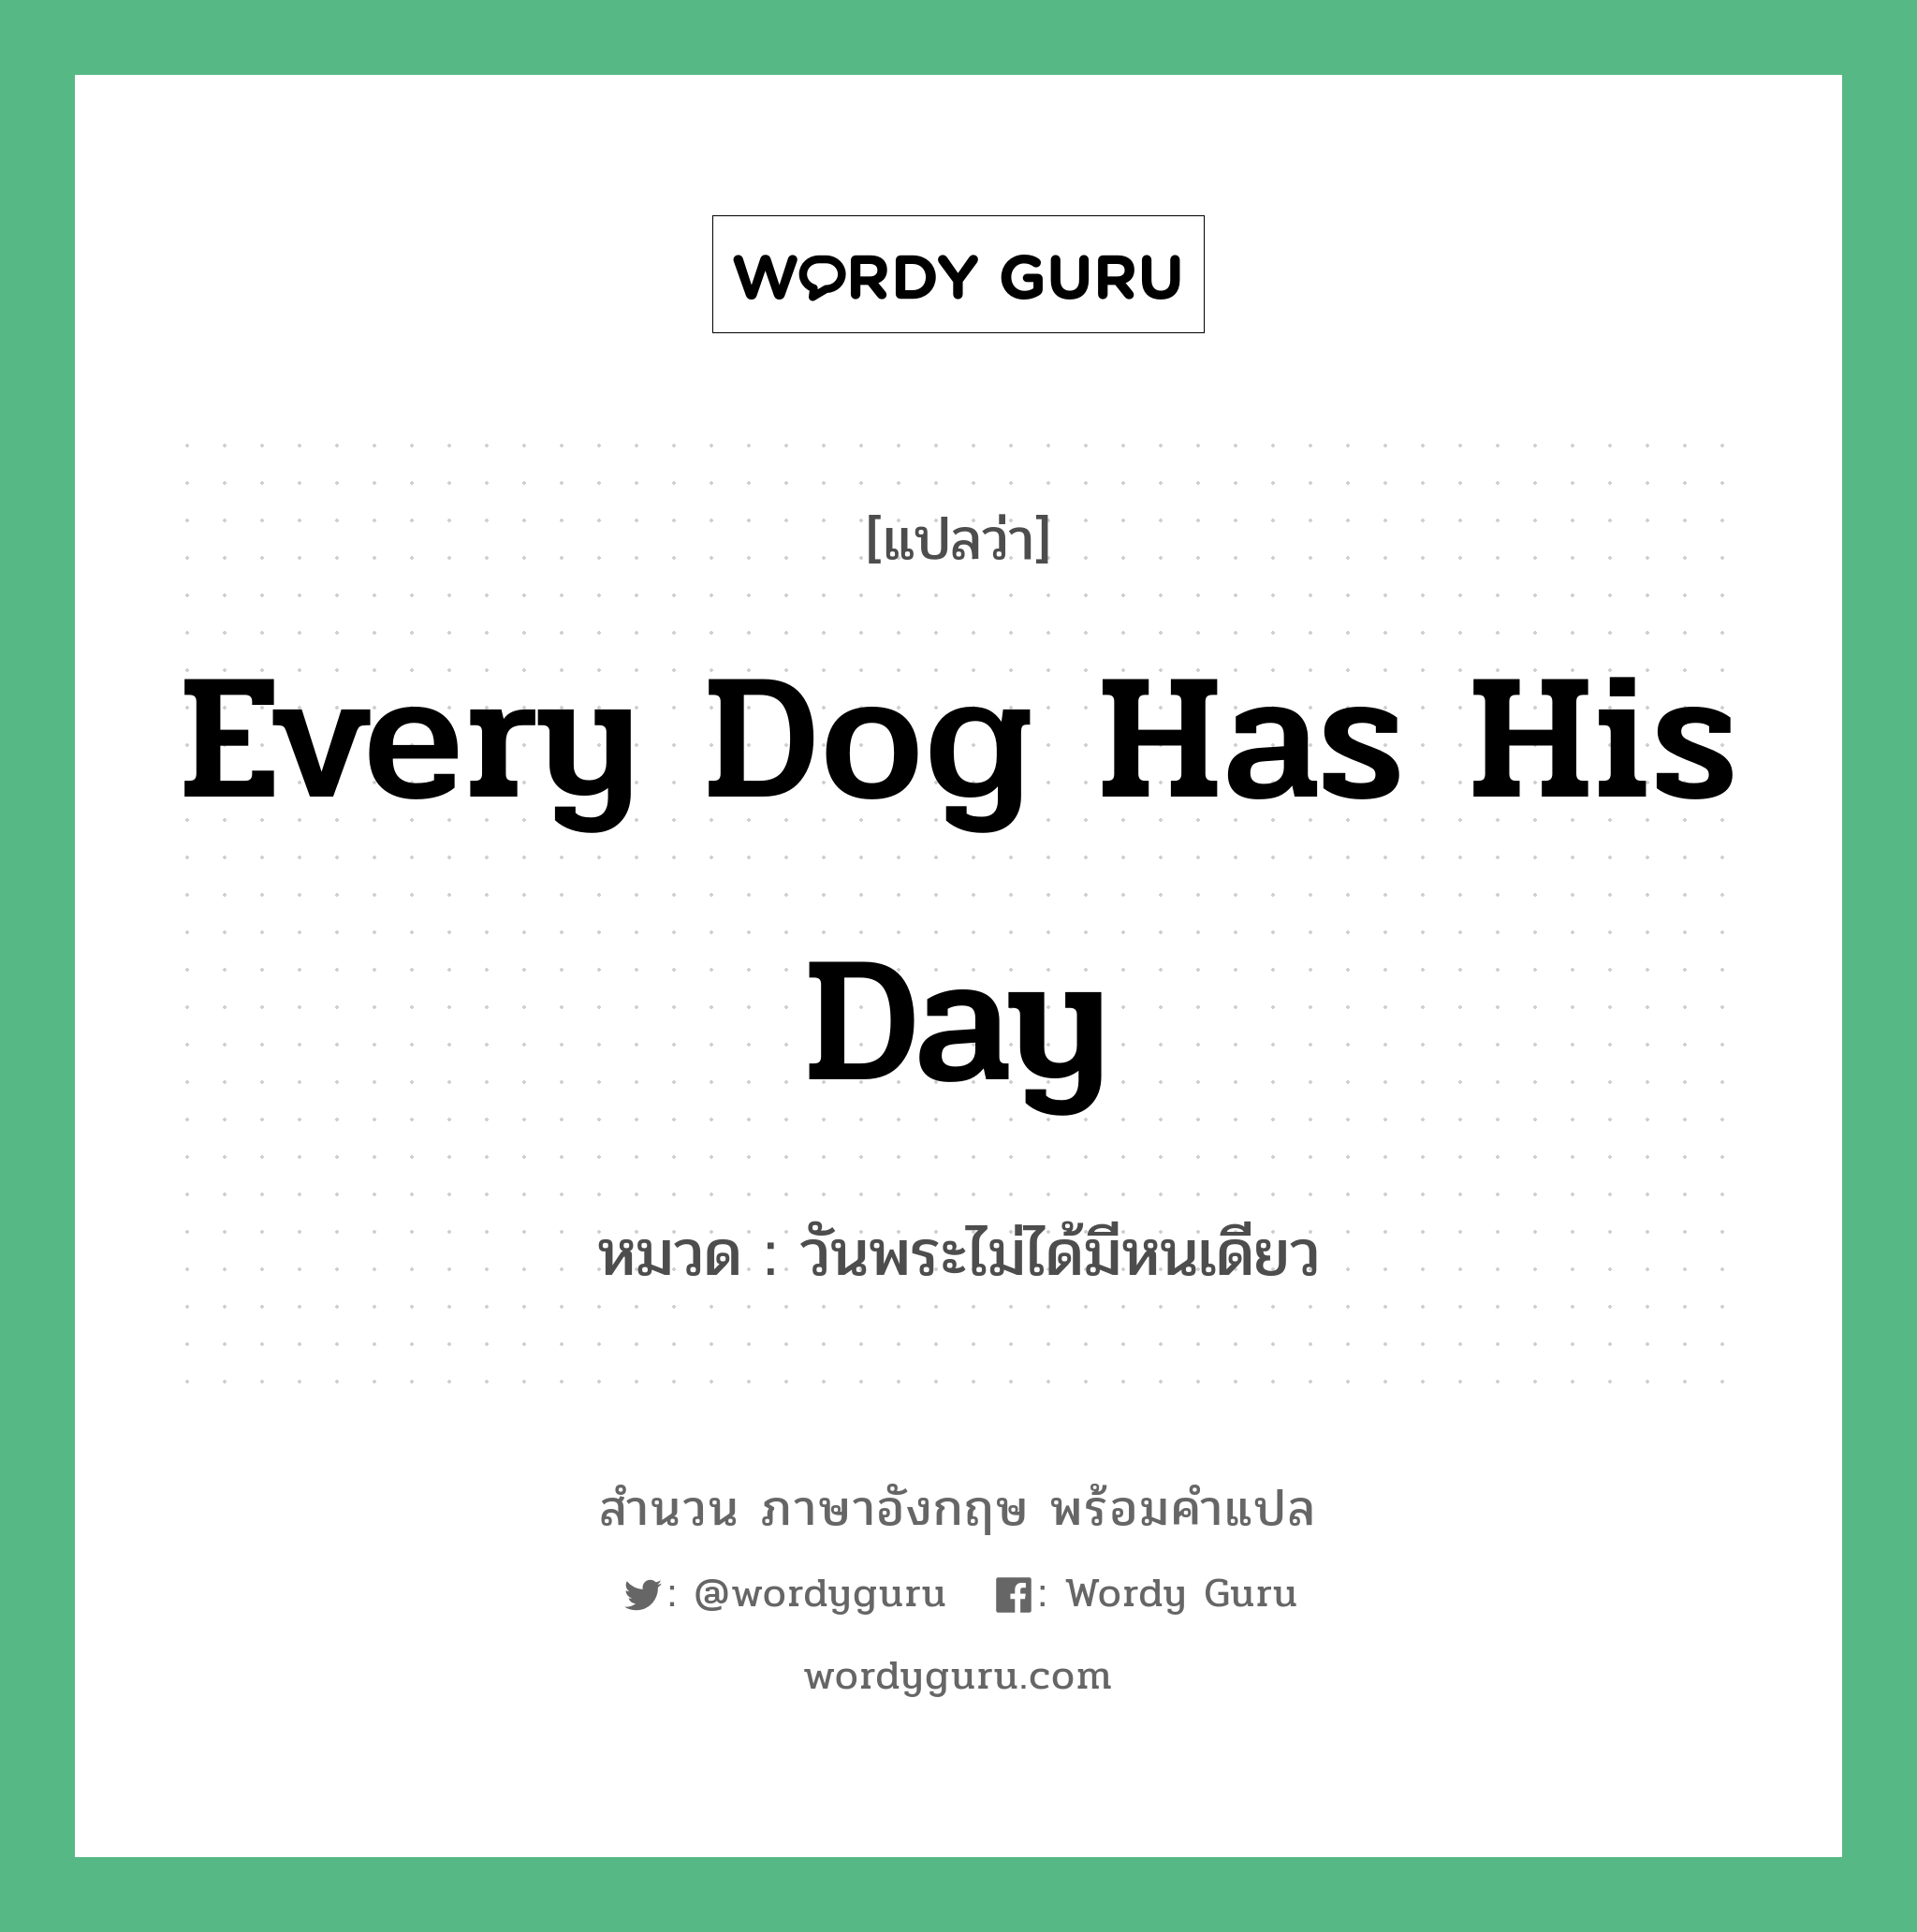 Every dog has his day แปลว่า?, สำนวนภาษาอังกฤษ Every dog has his day หมวด วันพระไม่ได้มีหนเดียว Every dog has its day หมวด Every dog has its day